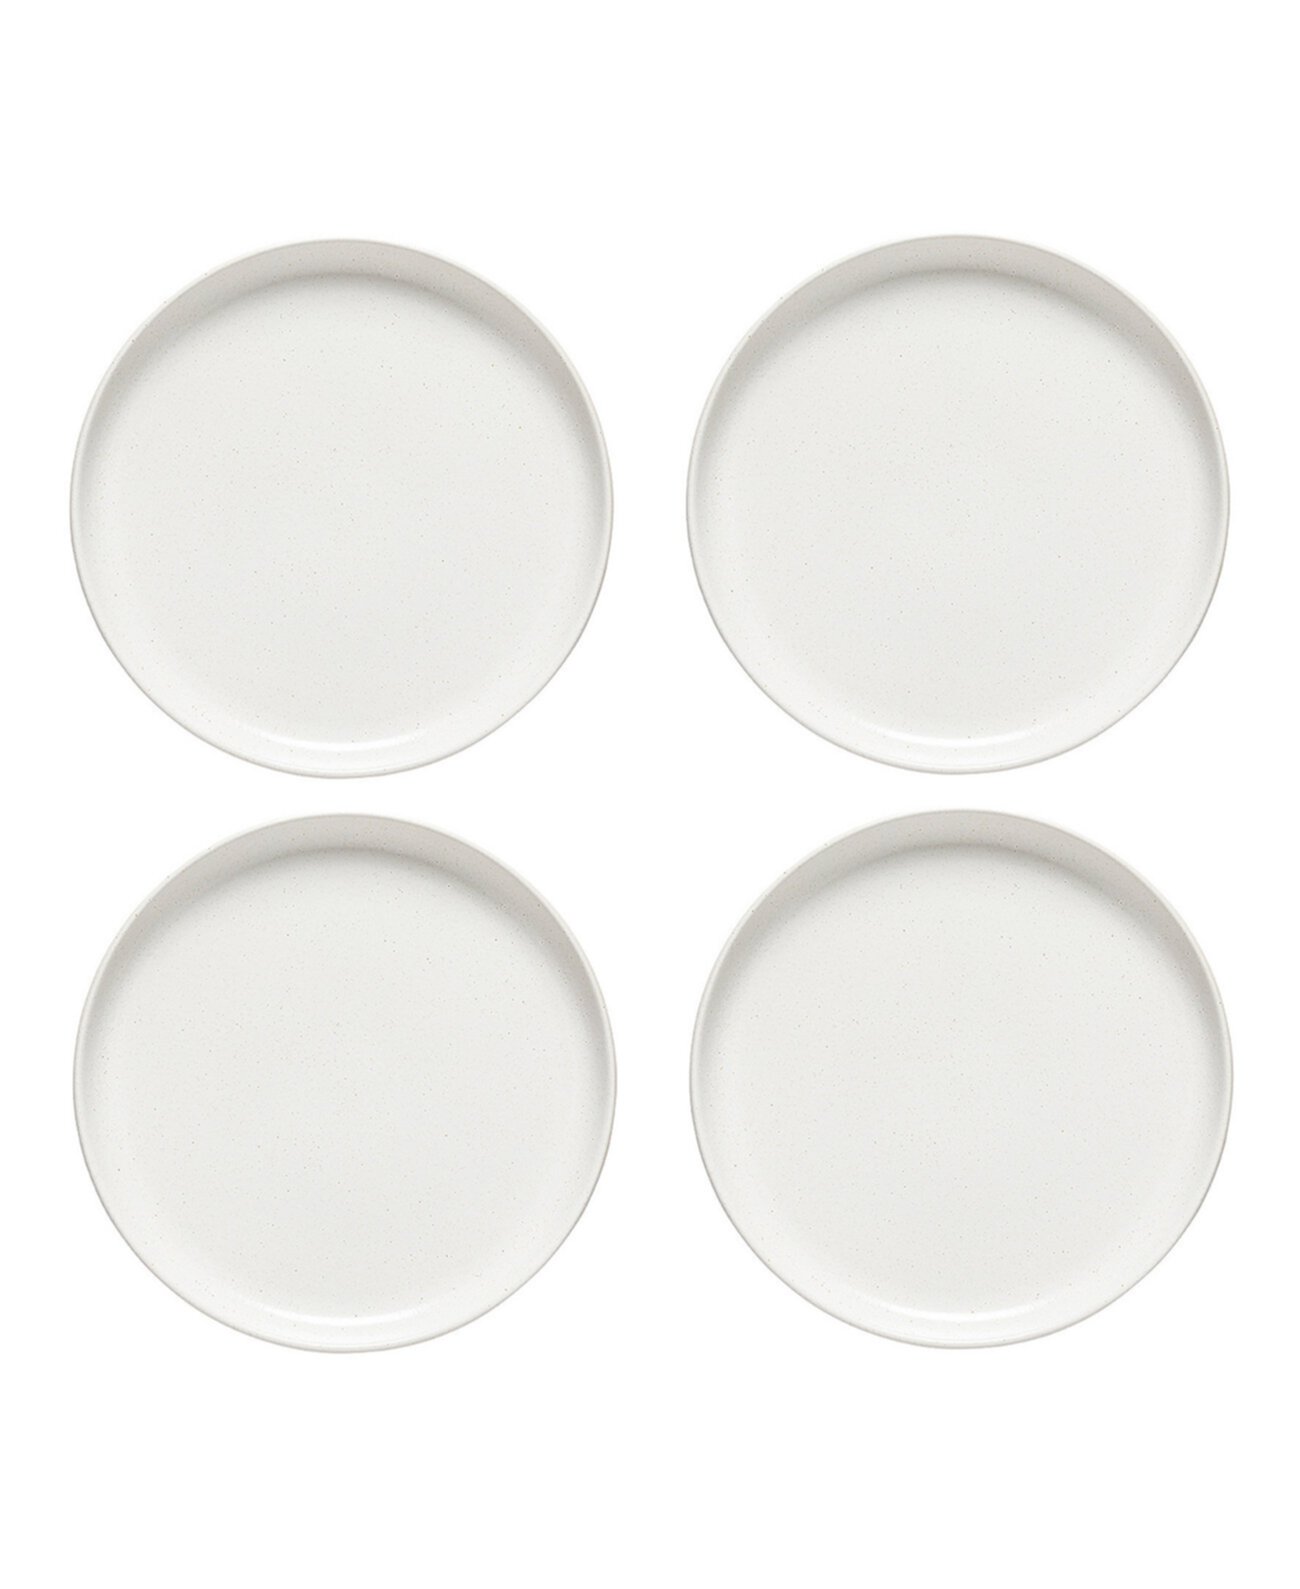 Pacifica Dinnerware Dinner Plate, Set of 4 Casafina